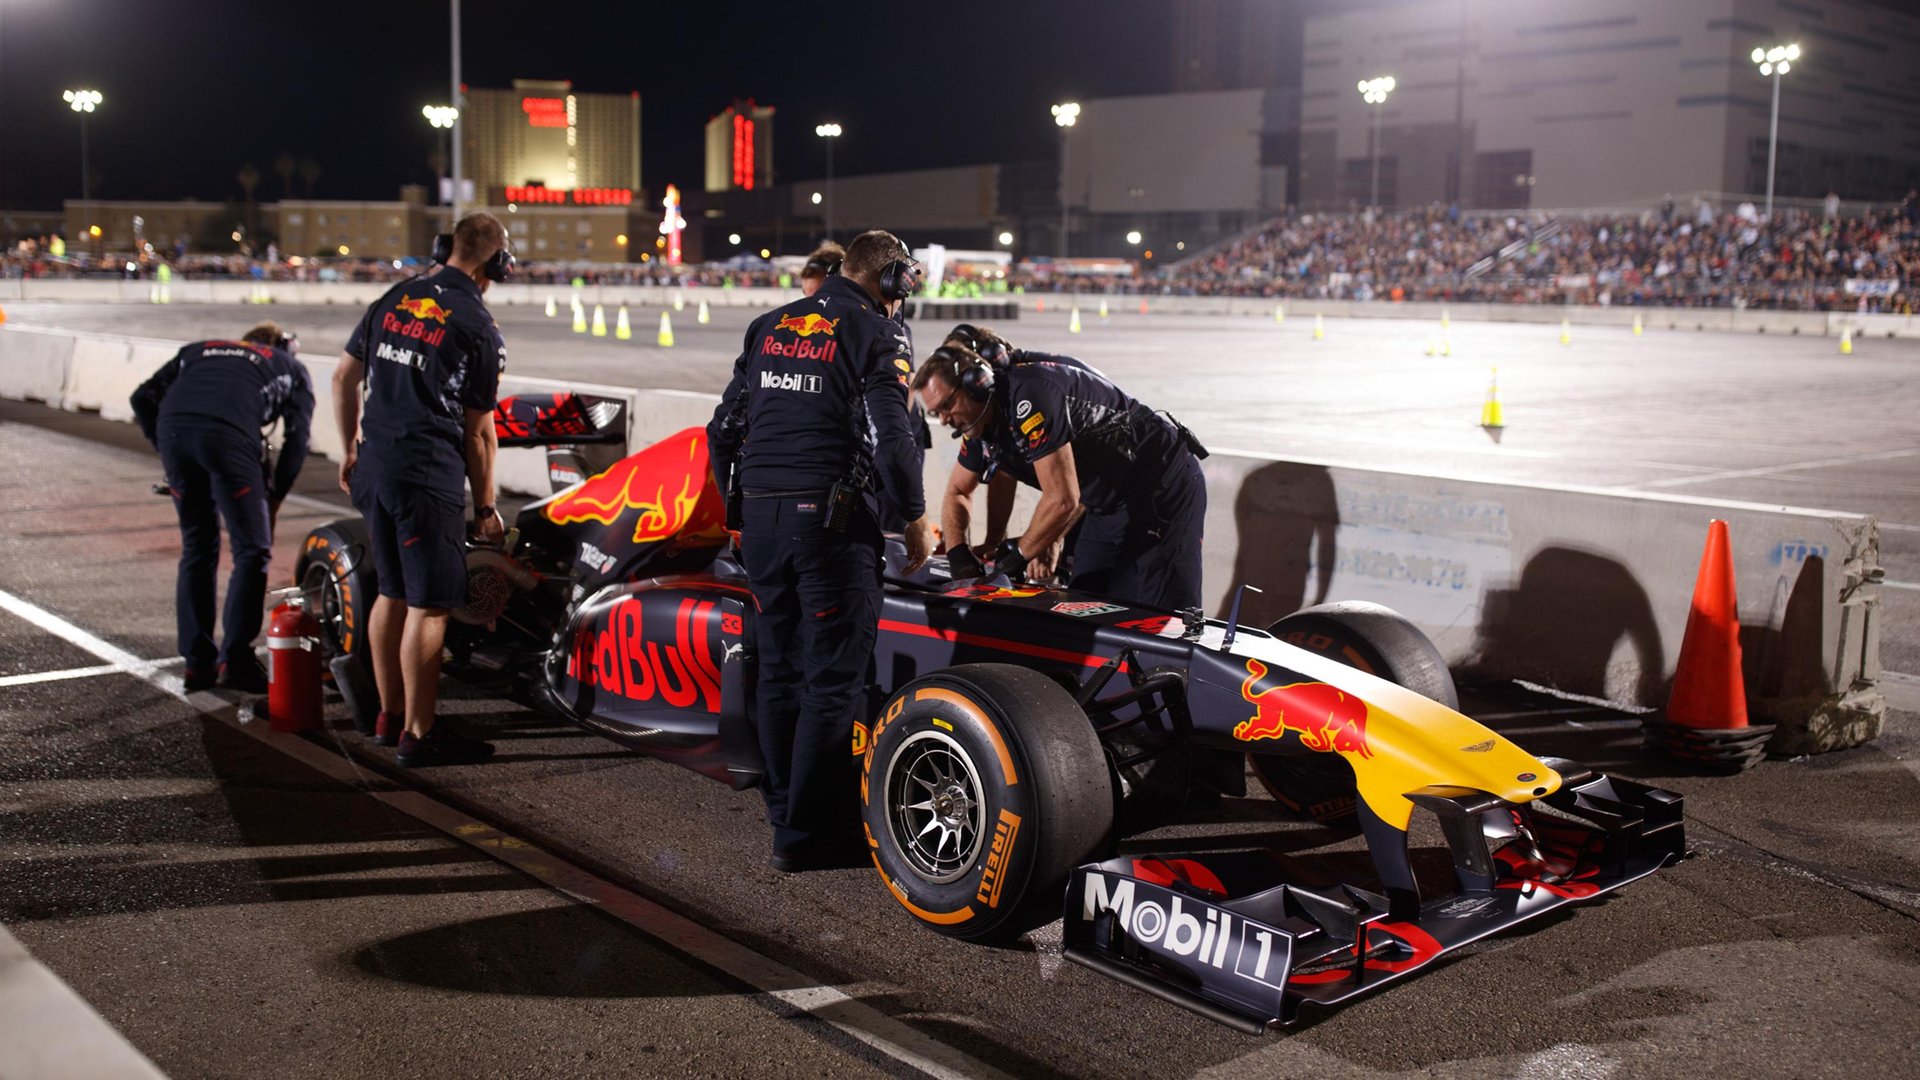 The Red Bull team prepares the car